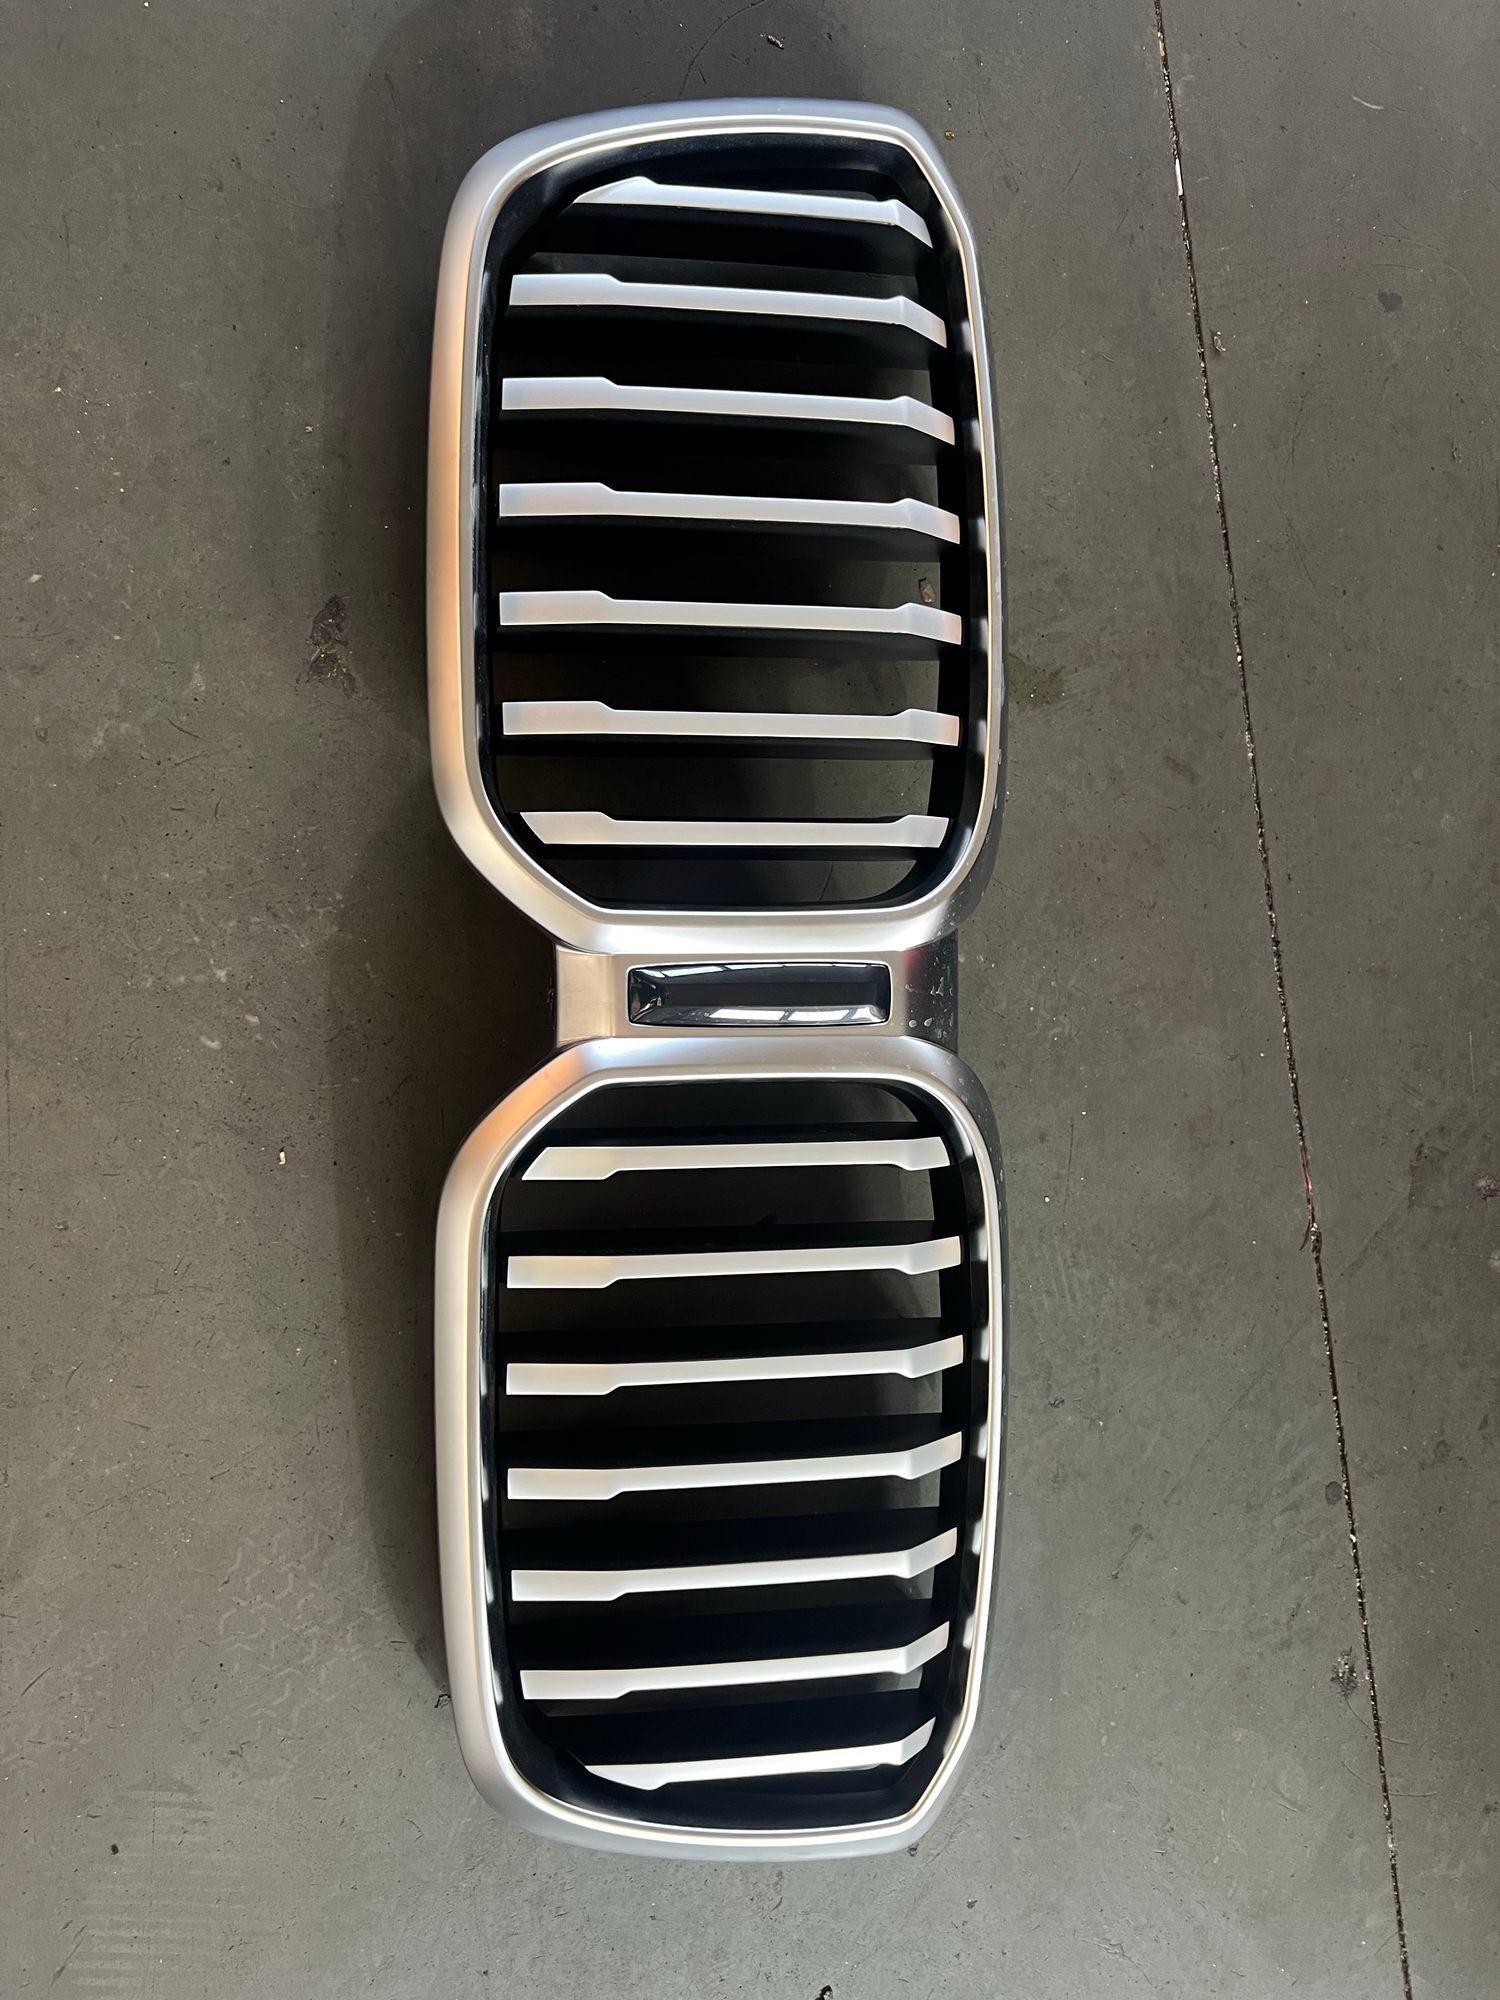 Решетка радиатора BMW X3 G01 